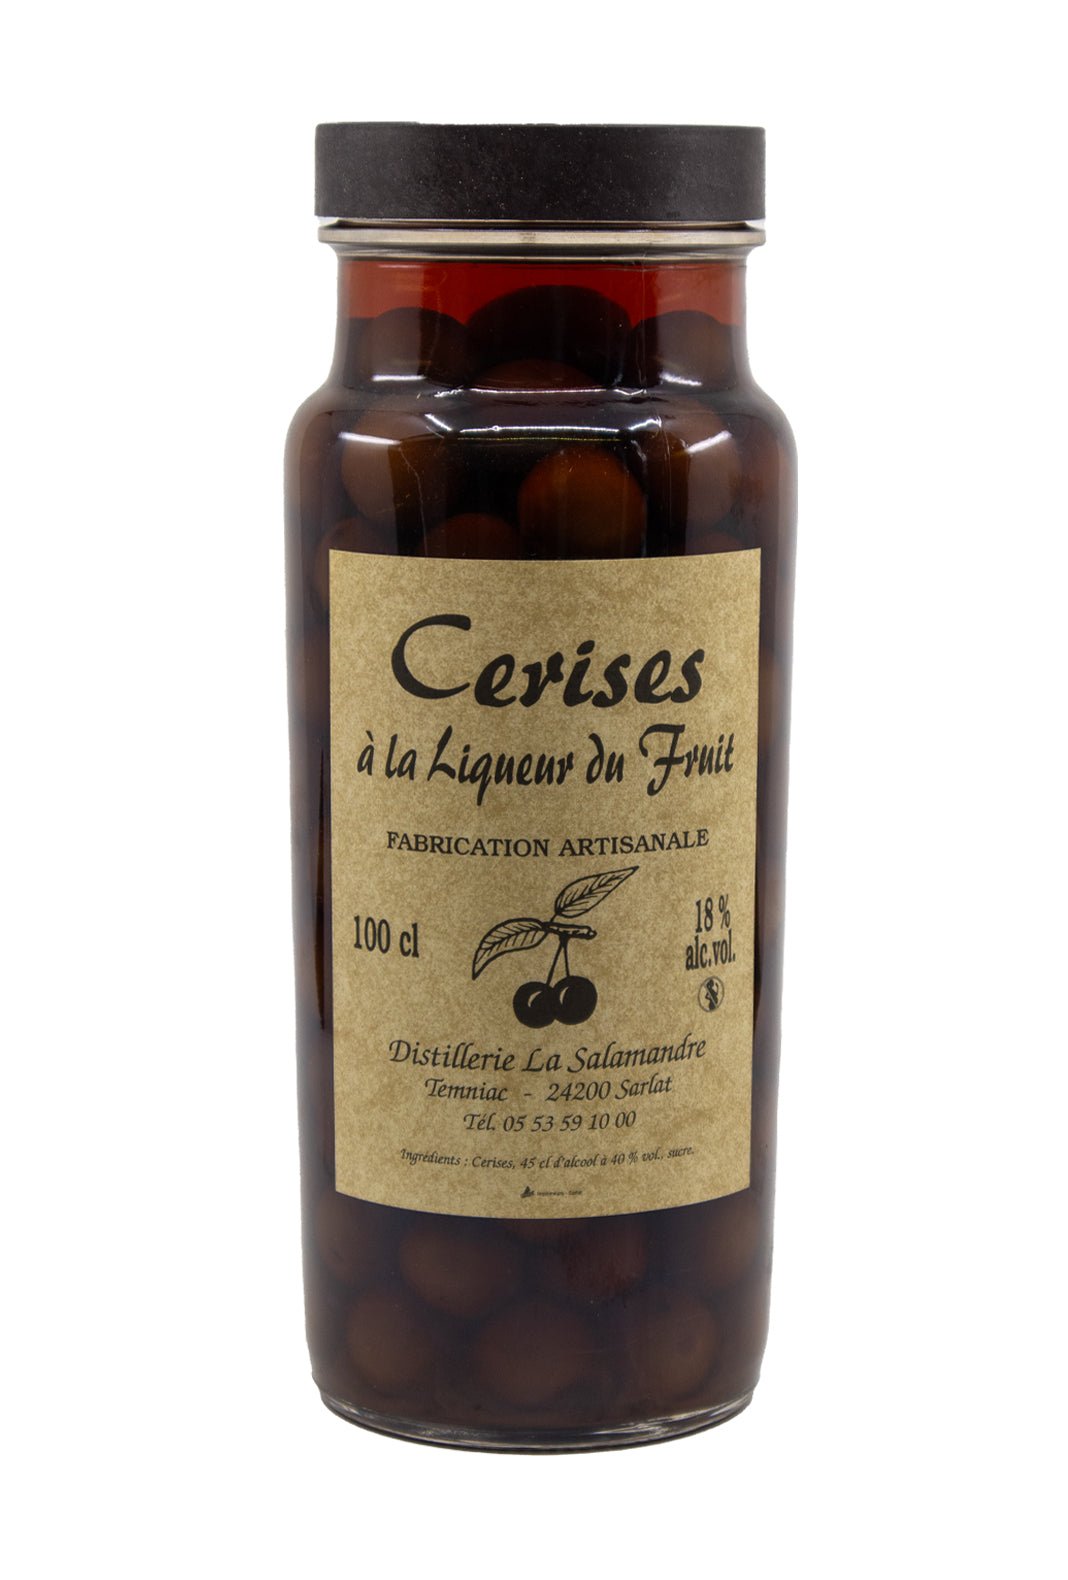 Salamandre Cerises a la Liqueur (Cherries in liqueur) 18% 1000ml | Condiments & Sauces | Shop online at Spirits of France